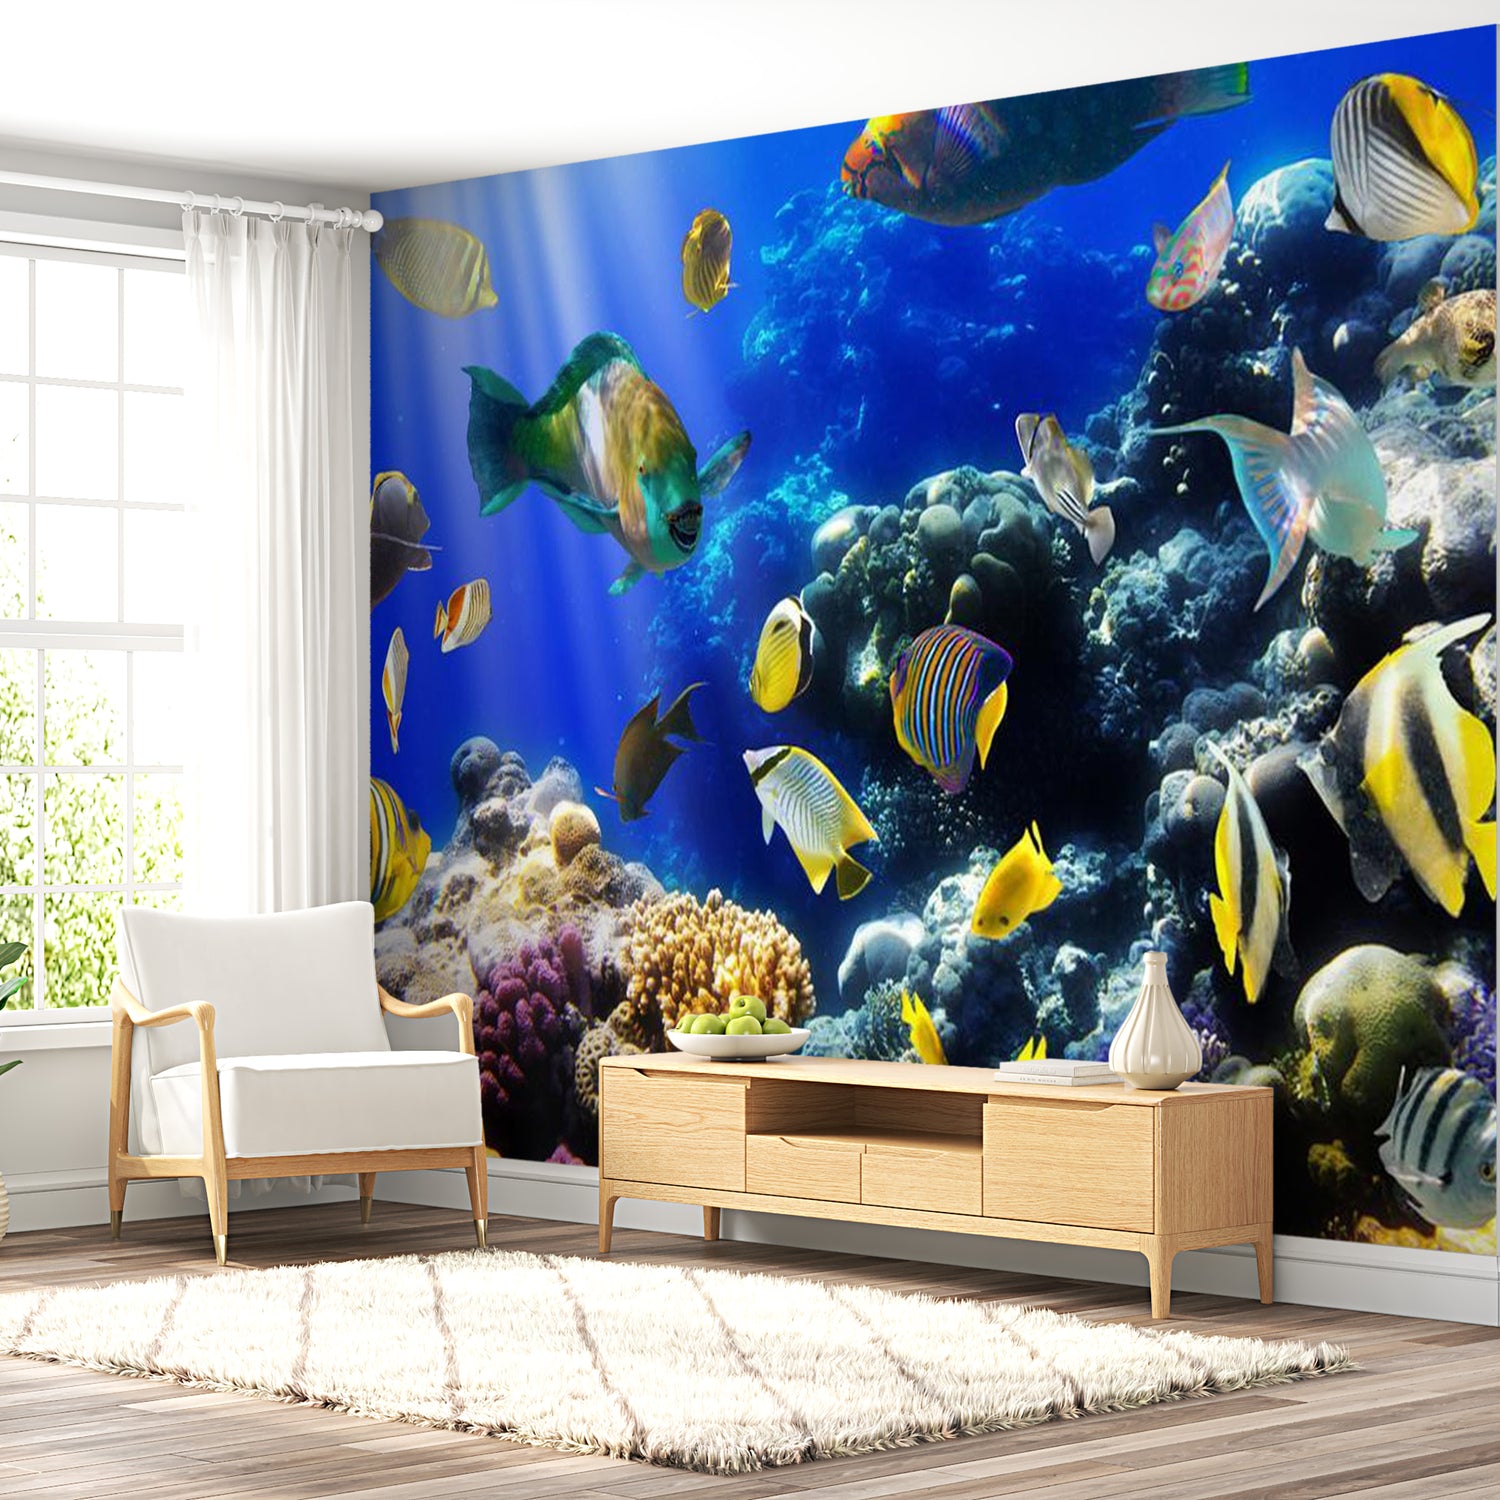 Underwater World 3D Digital Fish Wall Tapestry For Bedroom